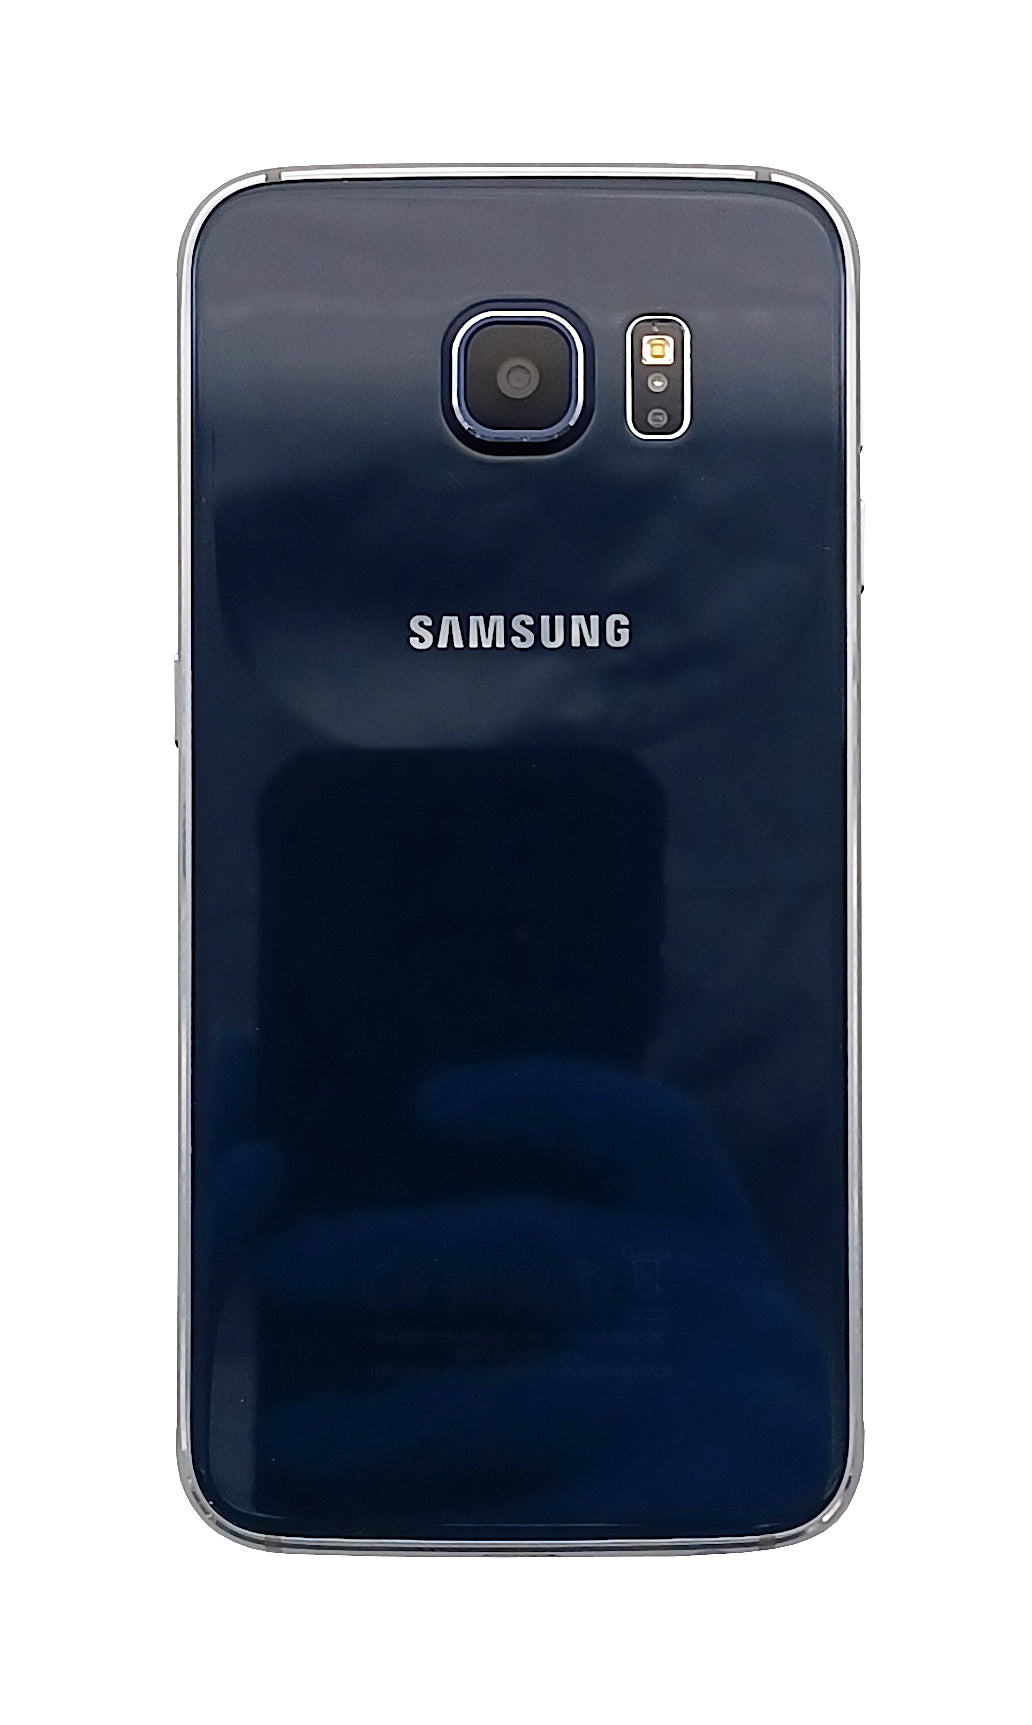 Samsung Galaxy S6 Smartphone, 32GB, Vodafone, Black, SM-G920F